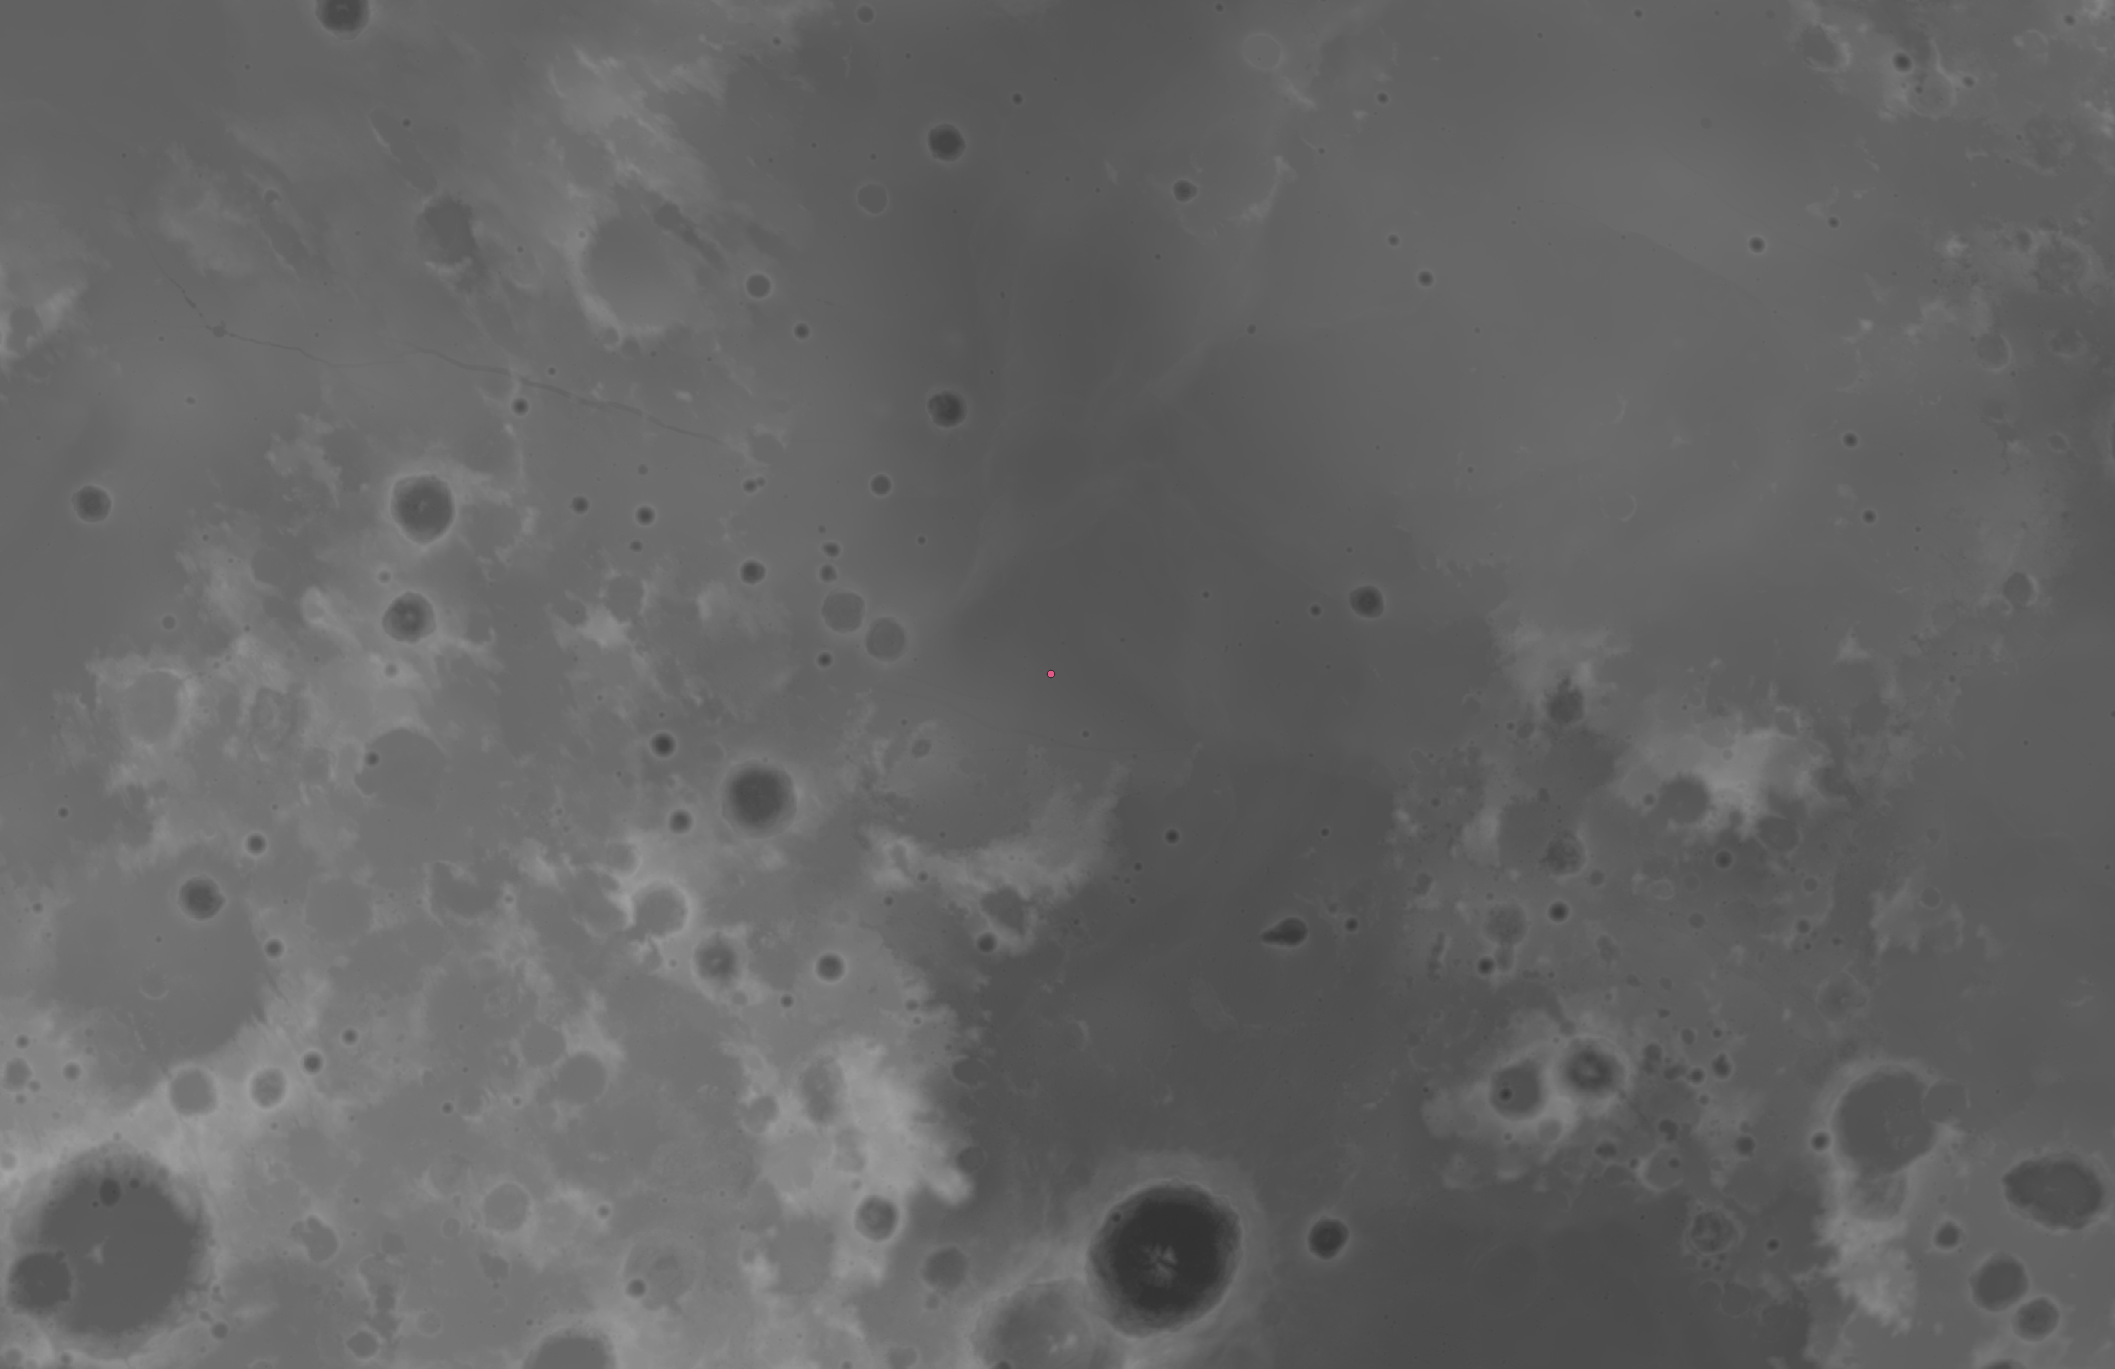 Digital Elevation Model of the moon